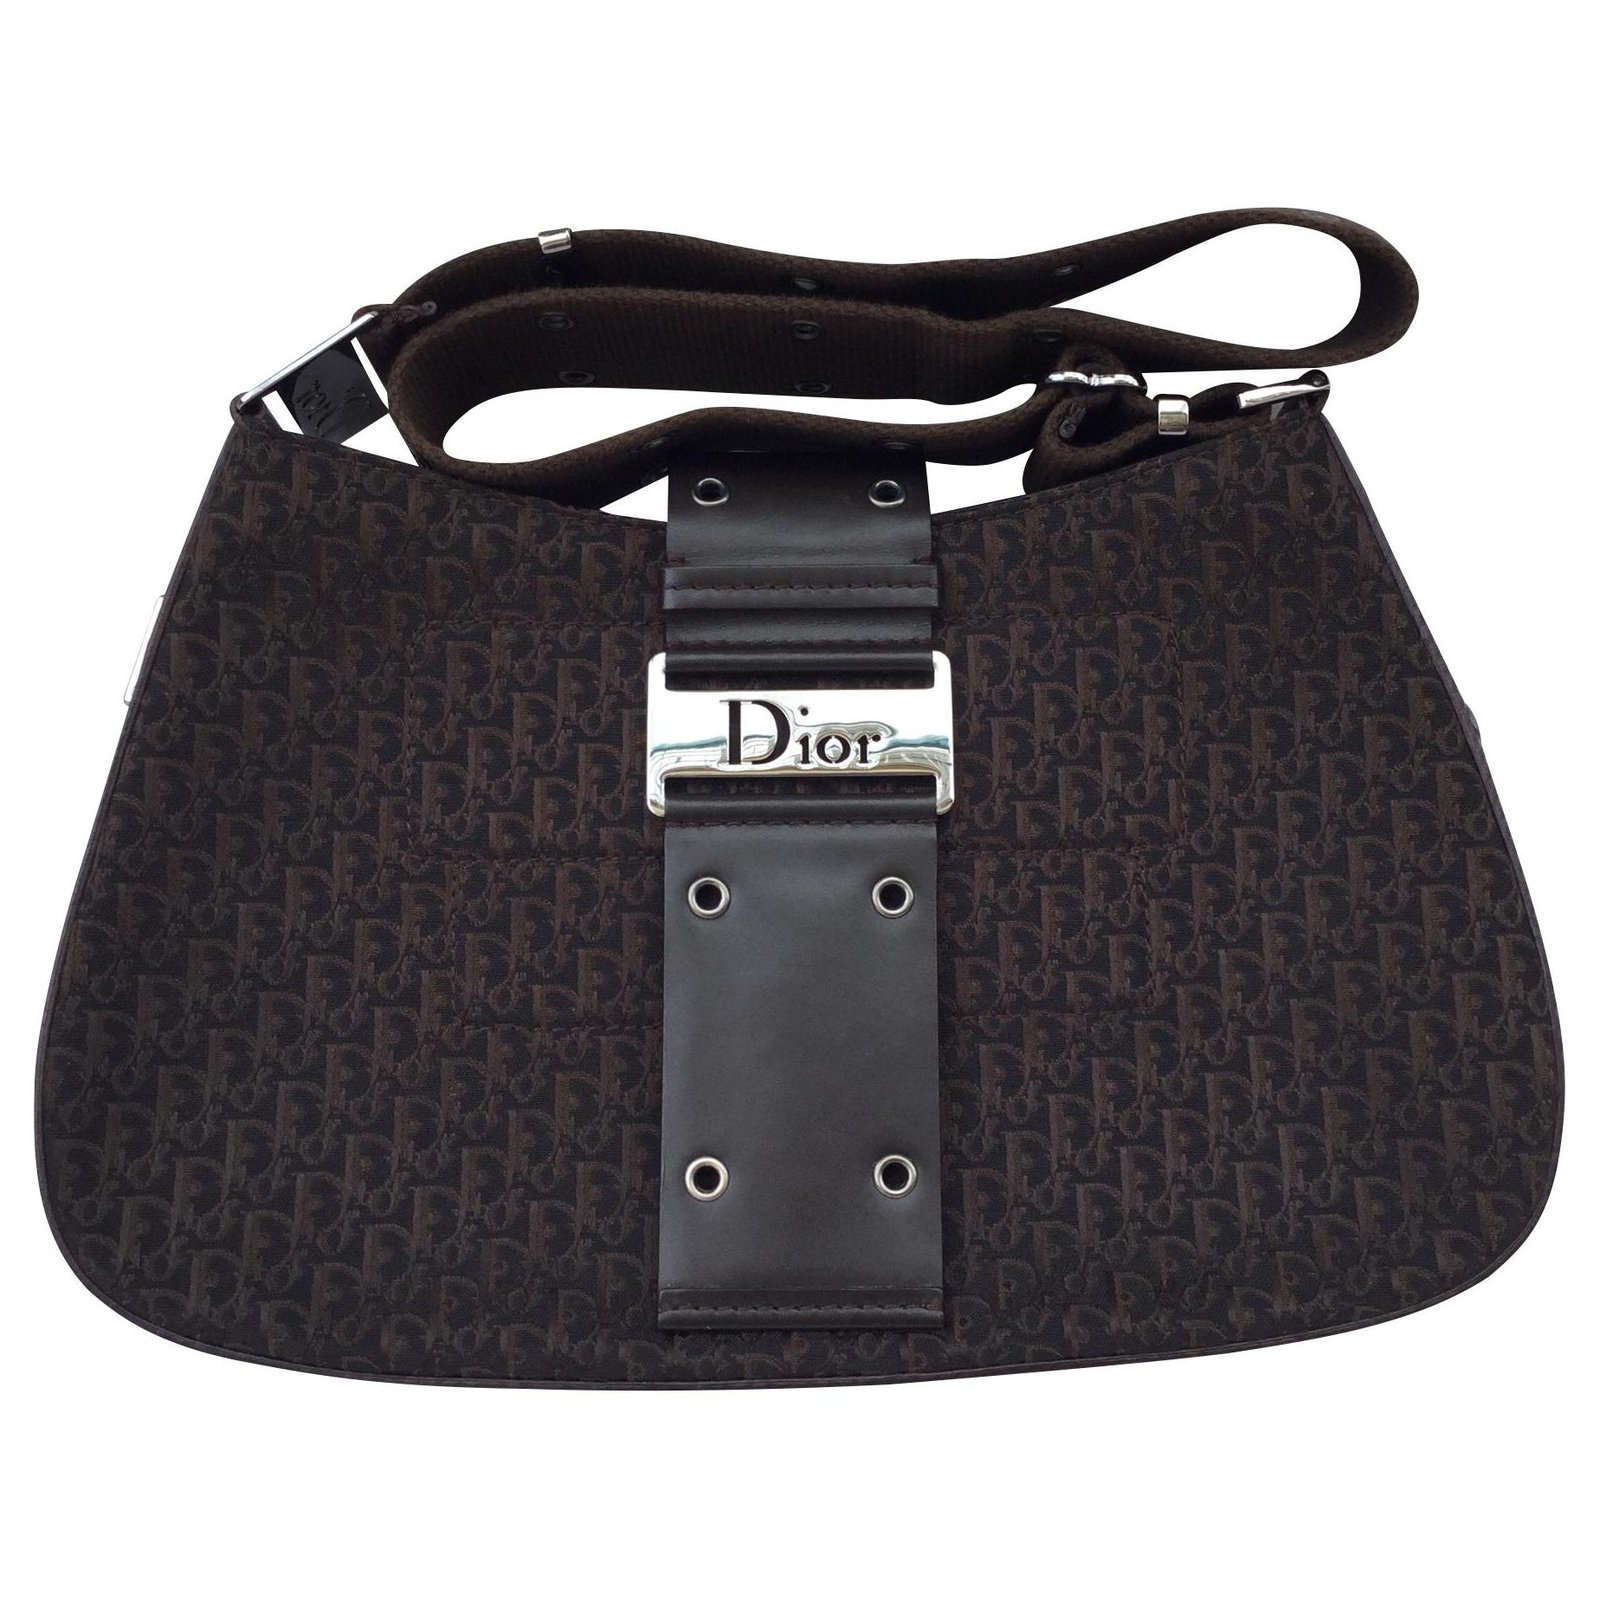 Christian Dior Columbus Handbag